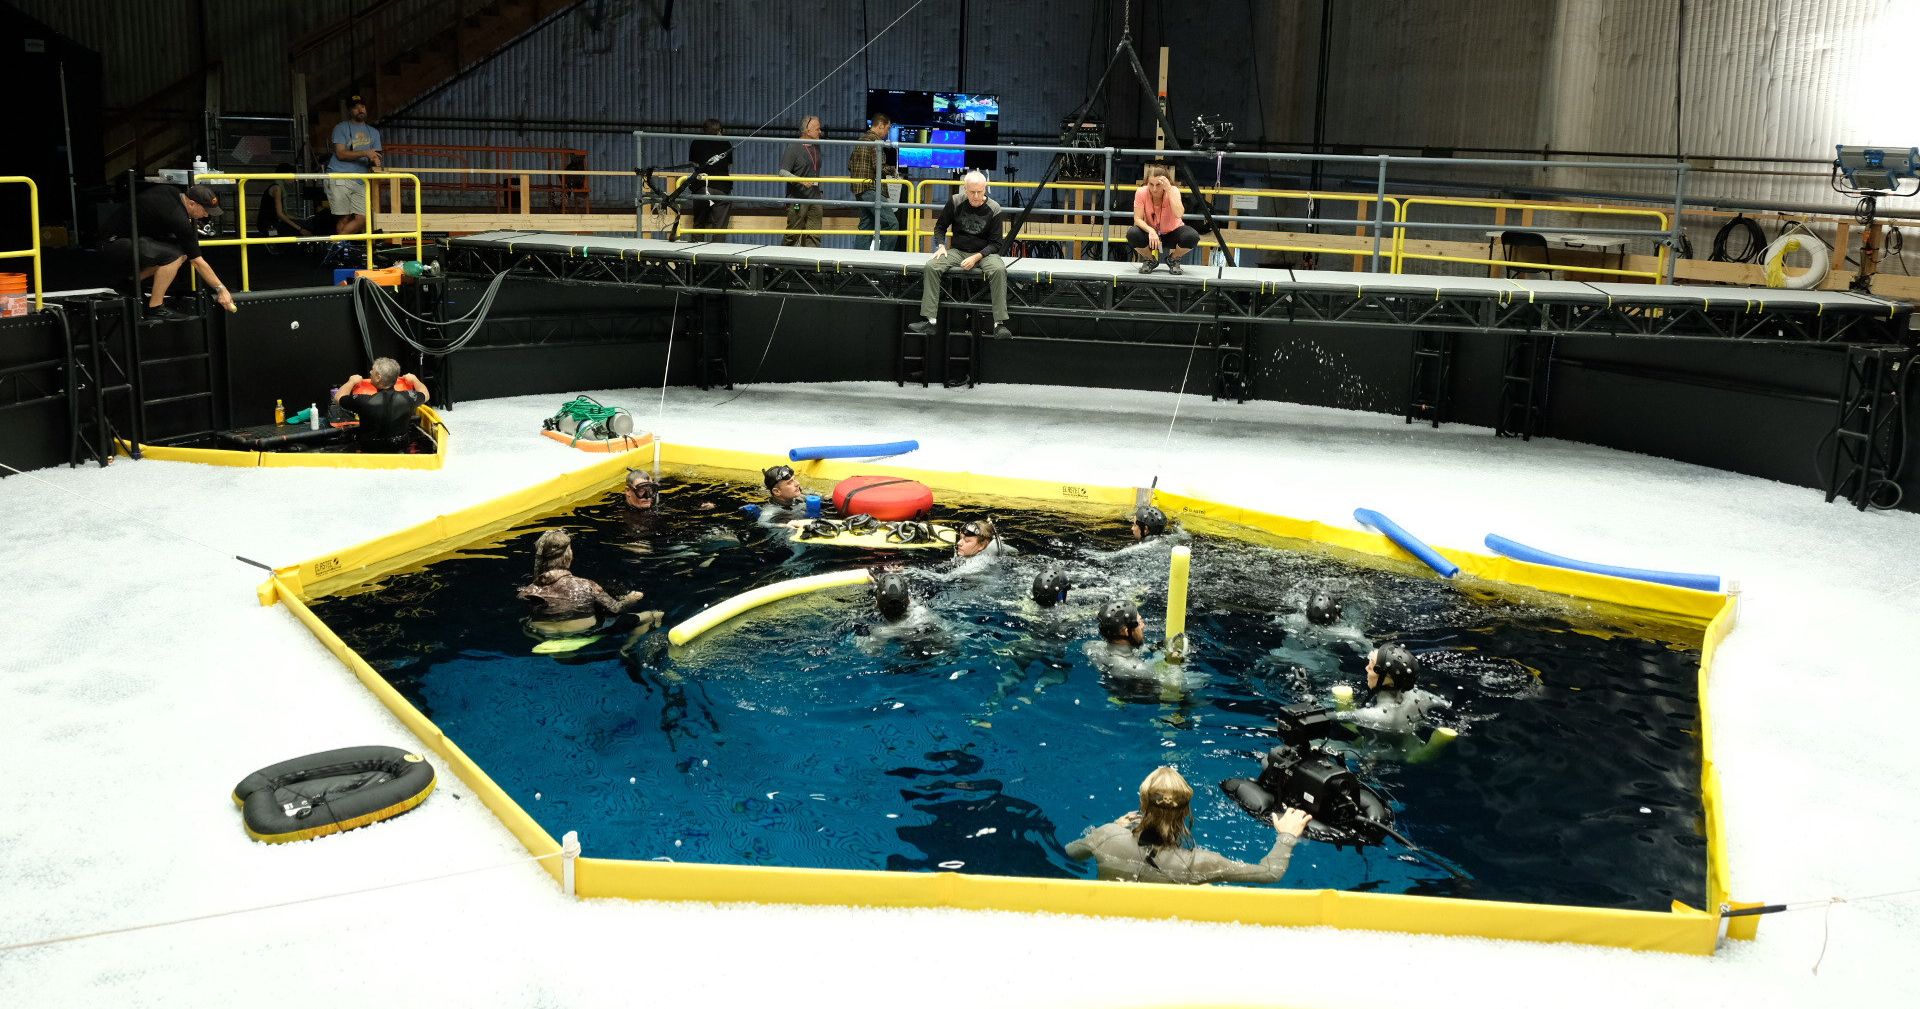 Avatar 2 Set Images Show Off James Cameron's Underwater Performance Capture Shoot